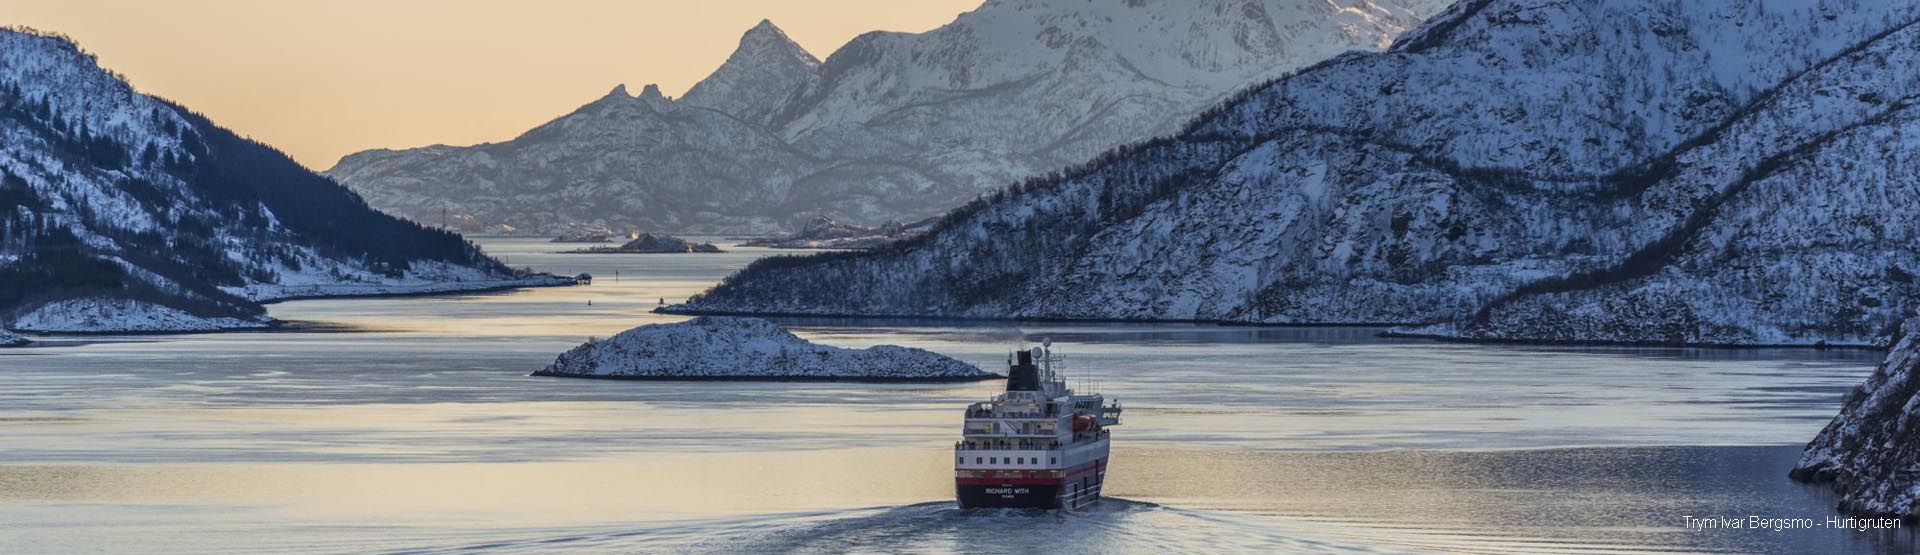 Hurtigruten Winter Seereisen: Norwegischer Fjordwelt erleben